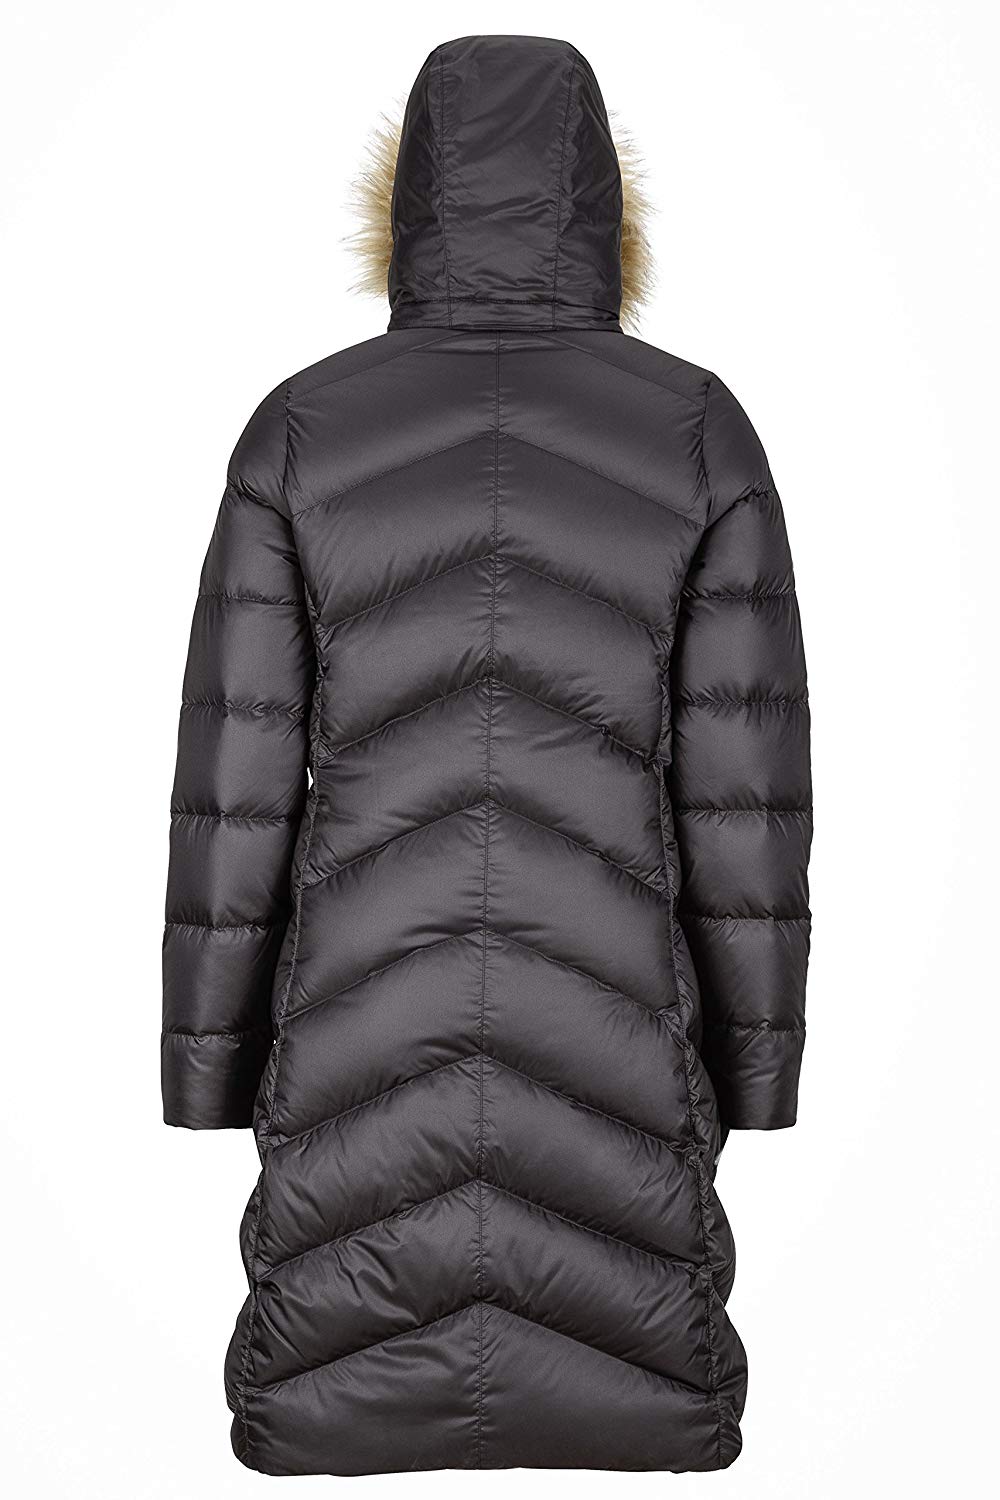 Marmot Women’s Wm’s Montreaux Coat, Warm, Insulated Hooded Winter Coat ...